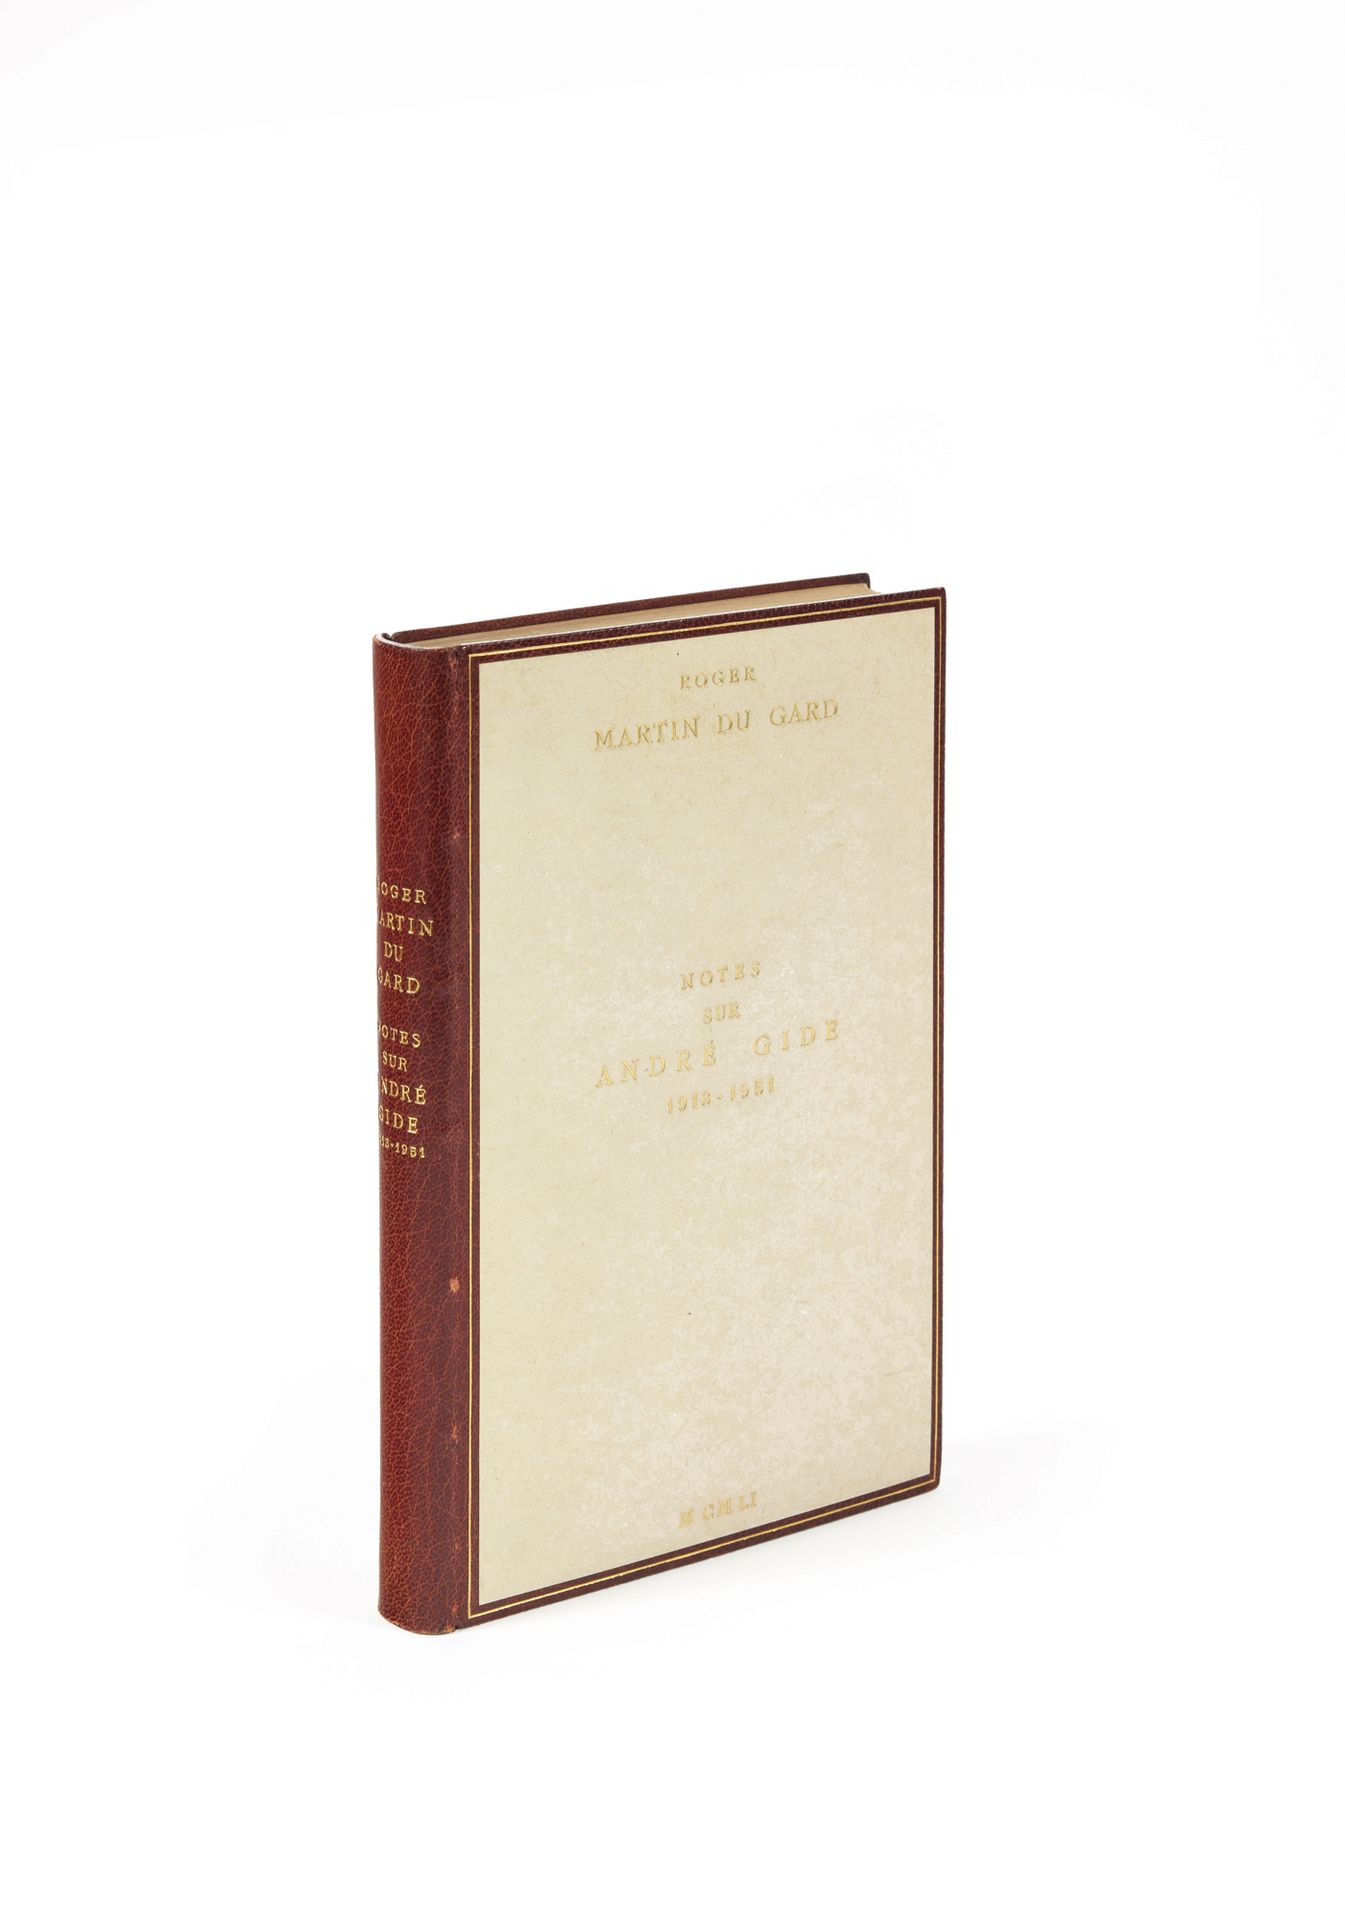 Martin du Gard, Roger Note su André Gide 1913-1951. Paris, Gallimard, 1951; in-8&hellip;